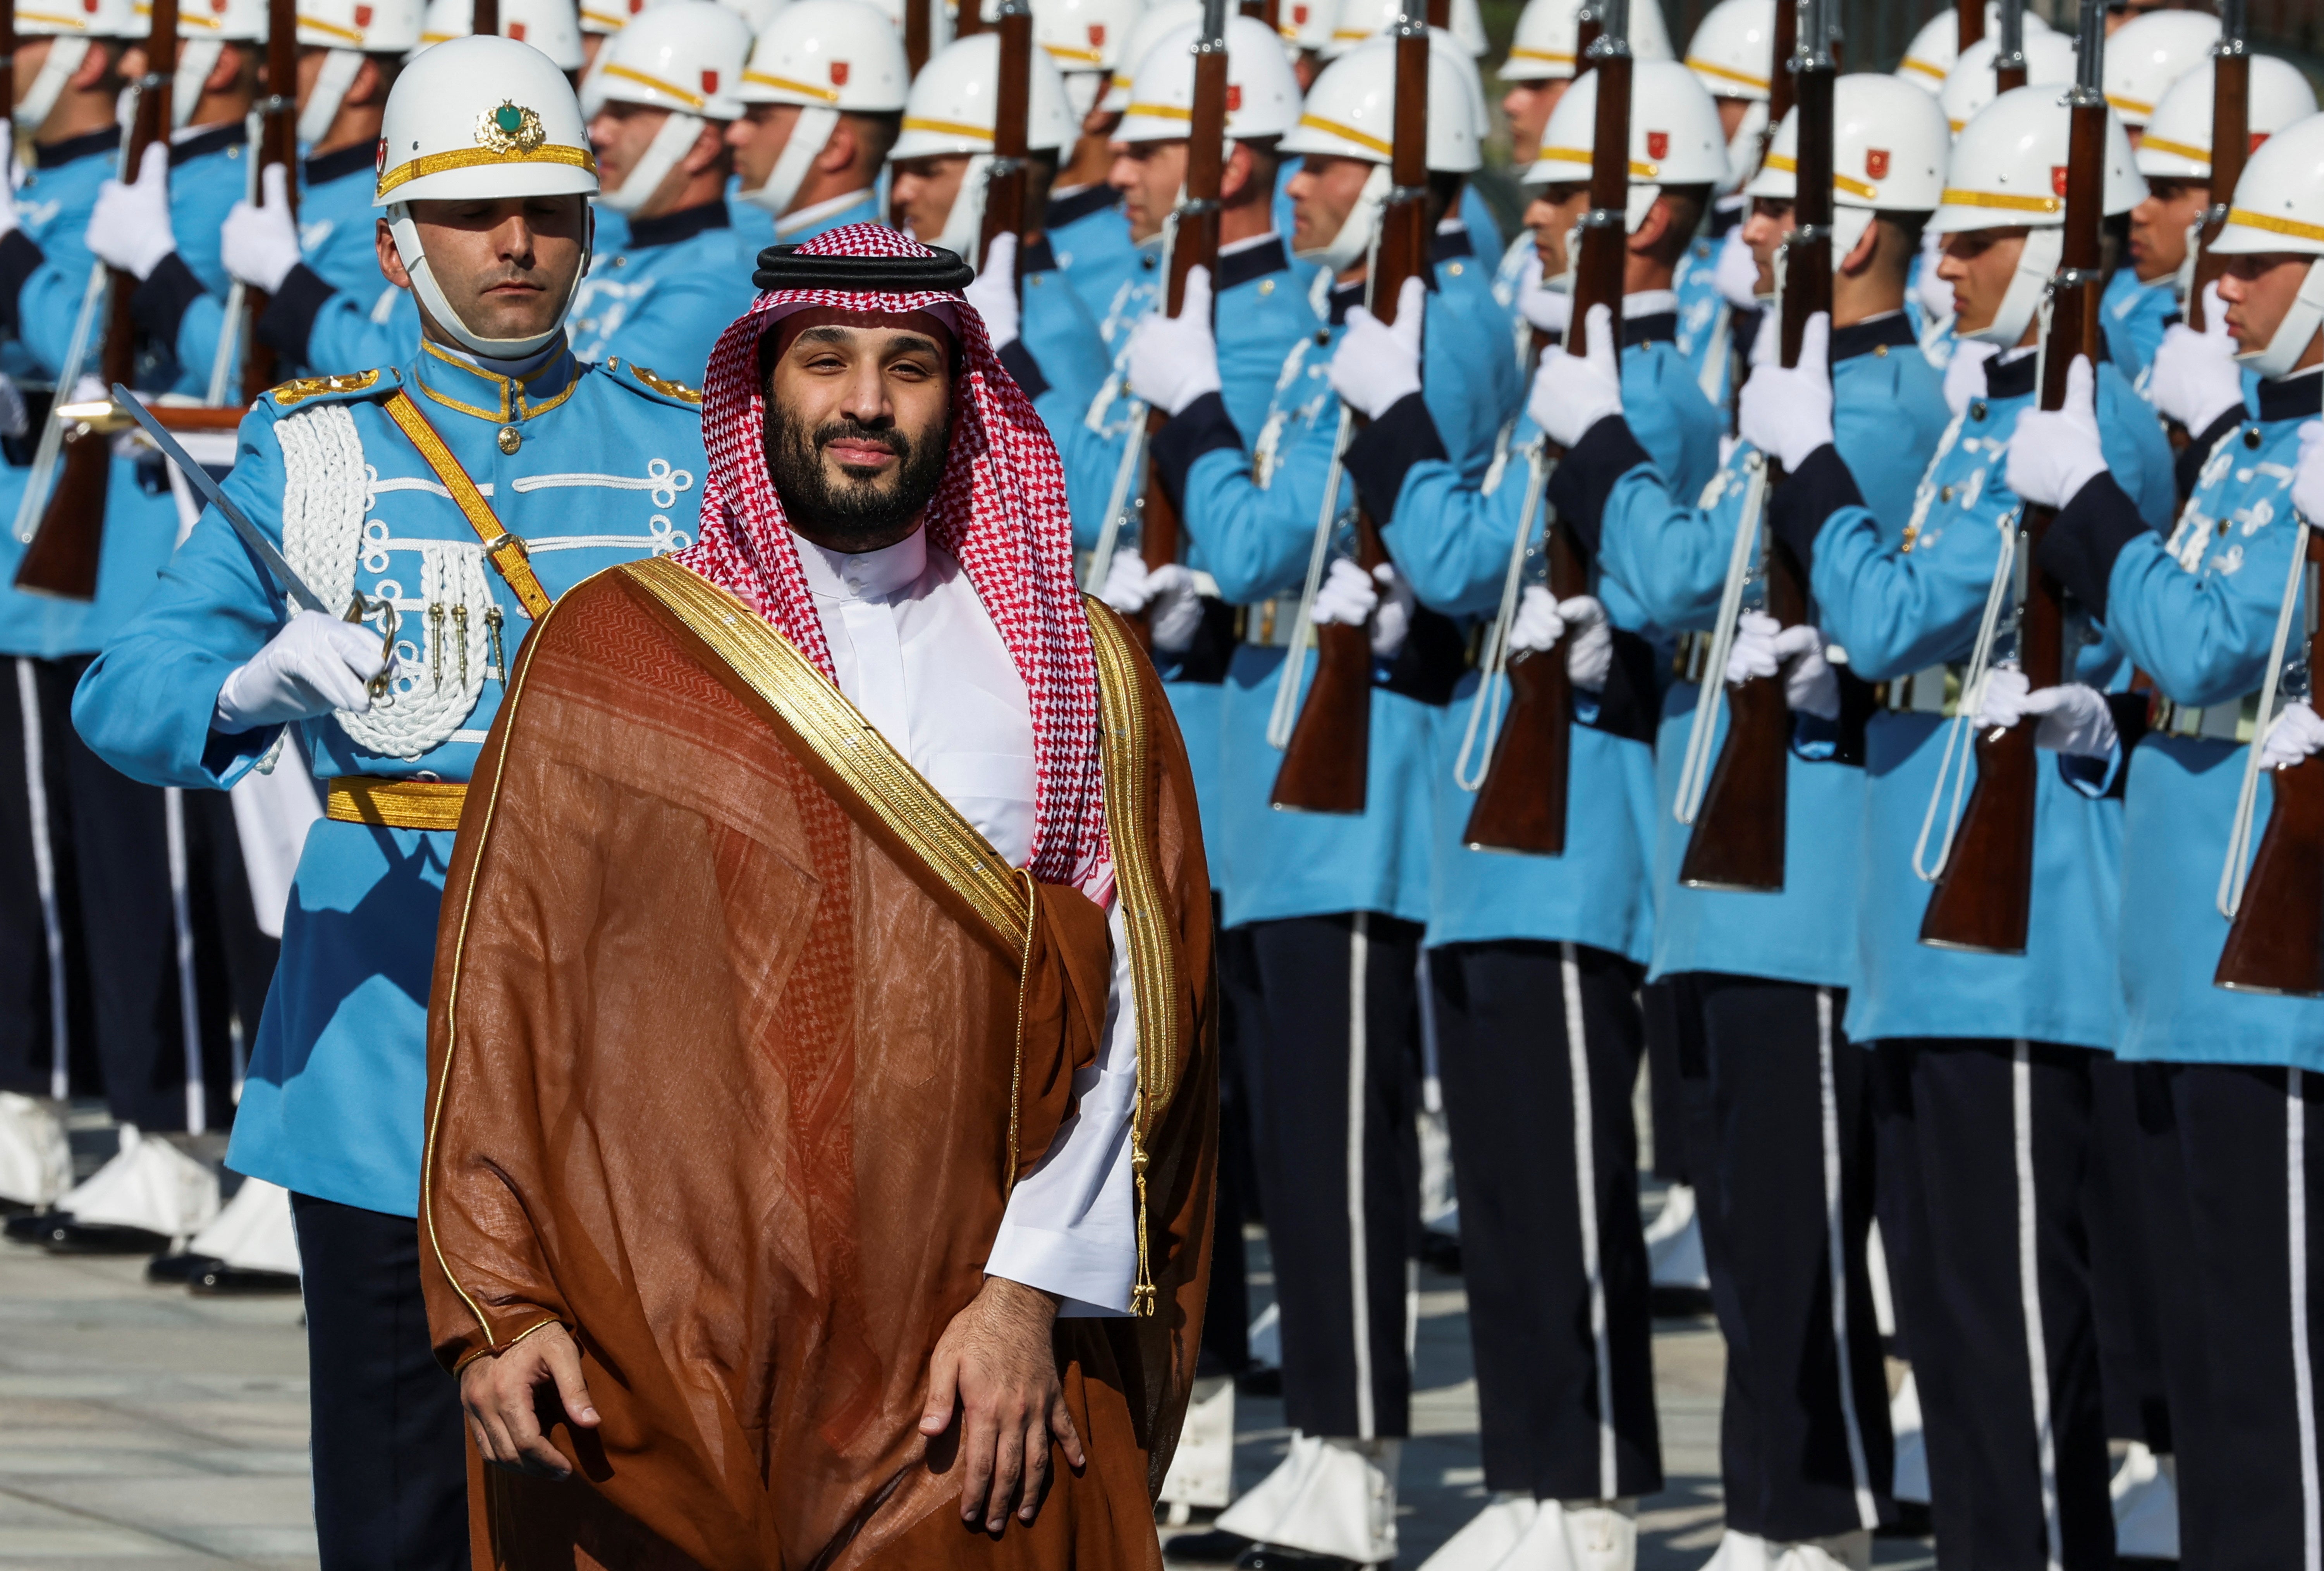 Saudi crown prince Mohammed bin Salman denied any role in murder of Khahoggi